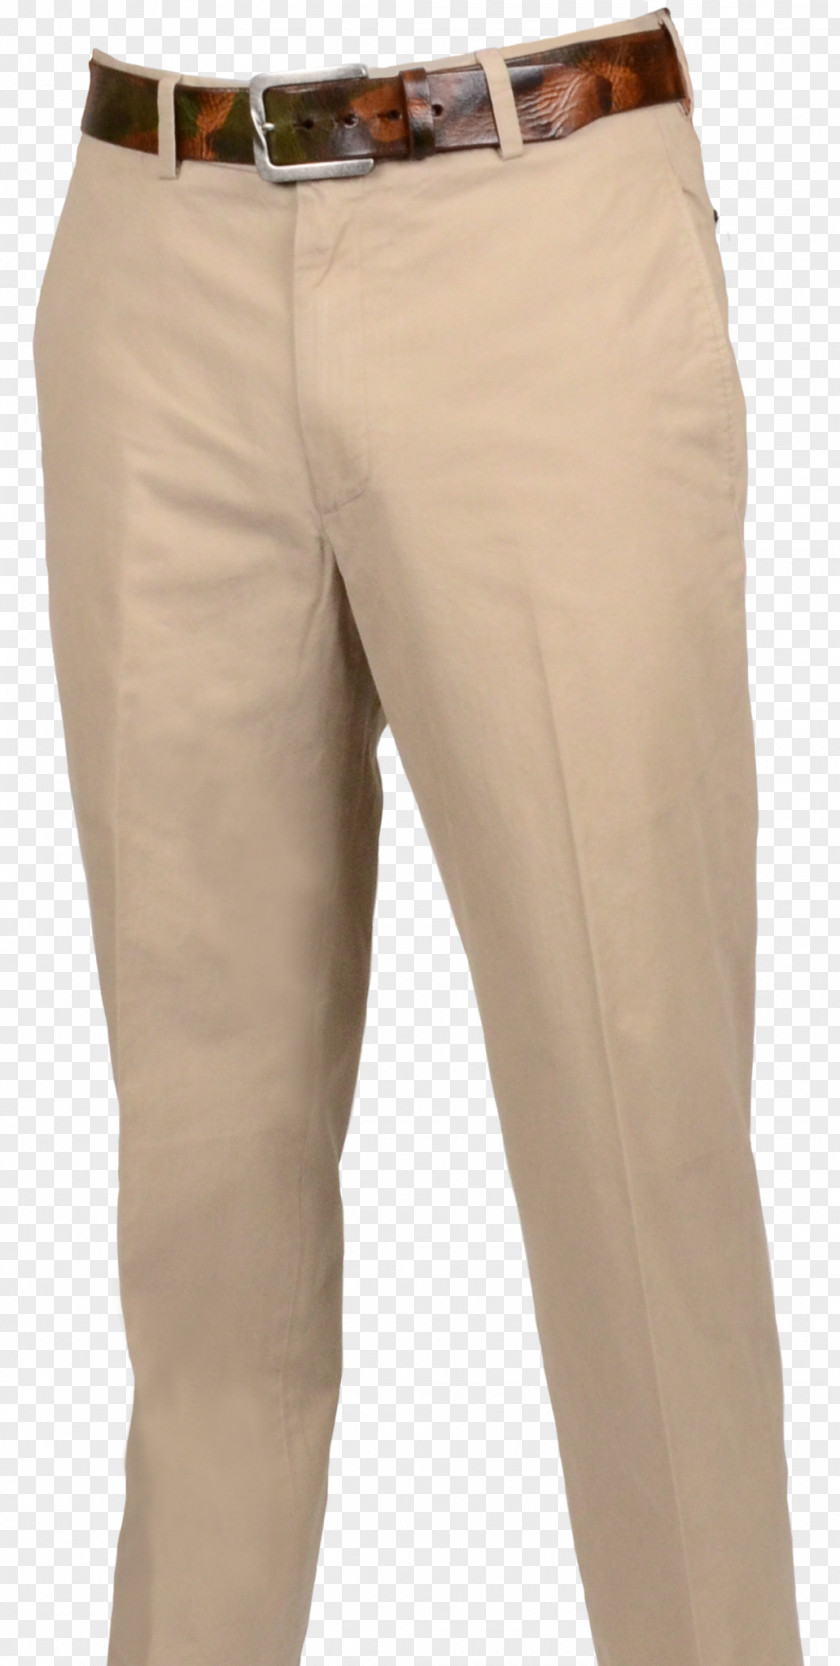 Khaki Lines Pants Clothing Dress Tan PNG